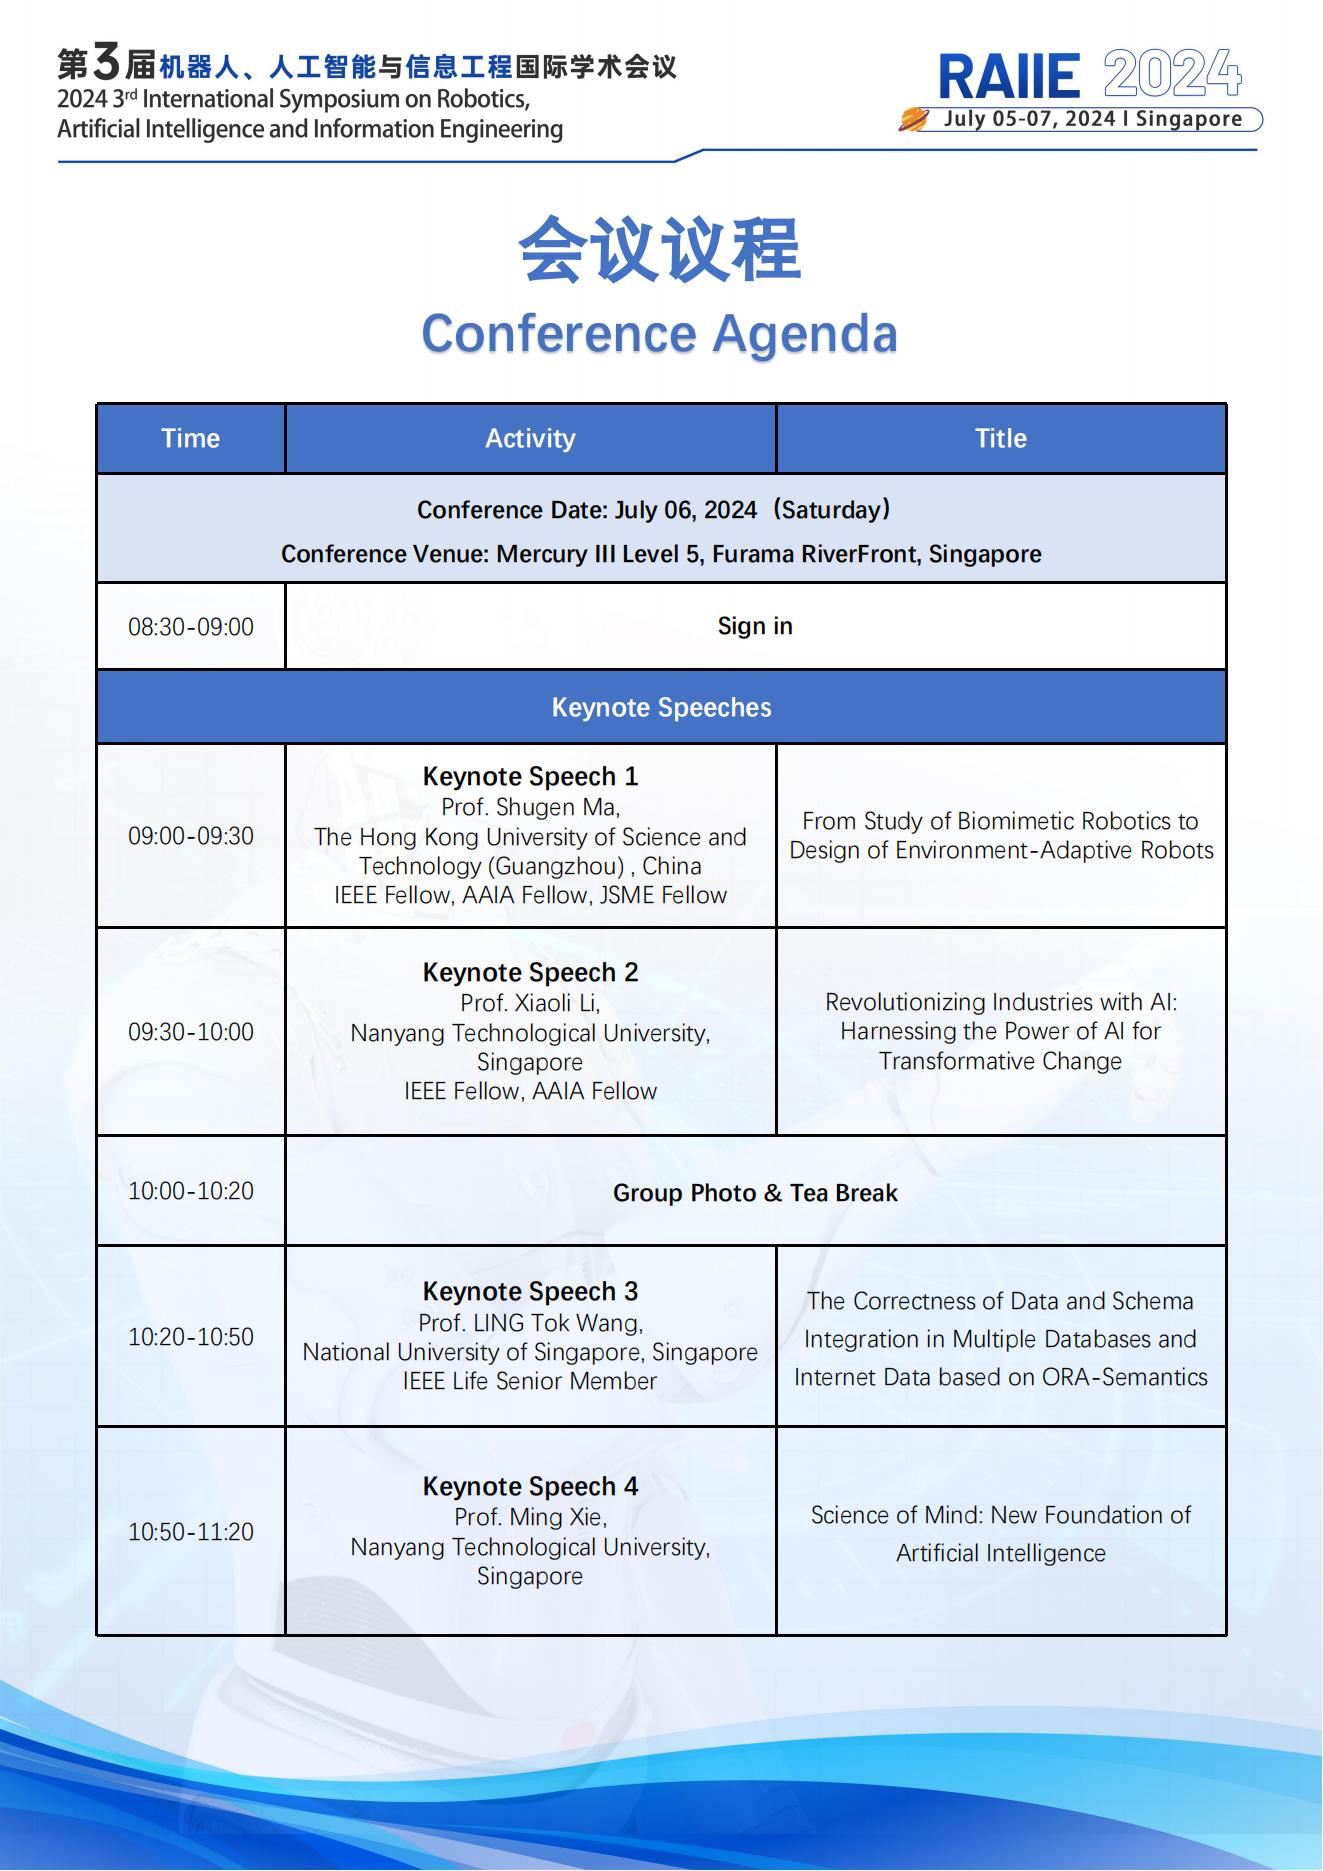 RAIIE 2024-Conference Agenda_00.jpg